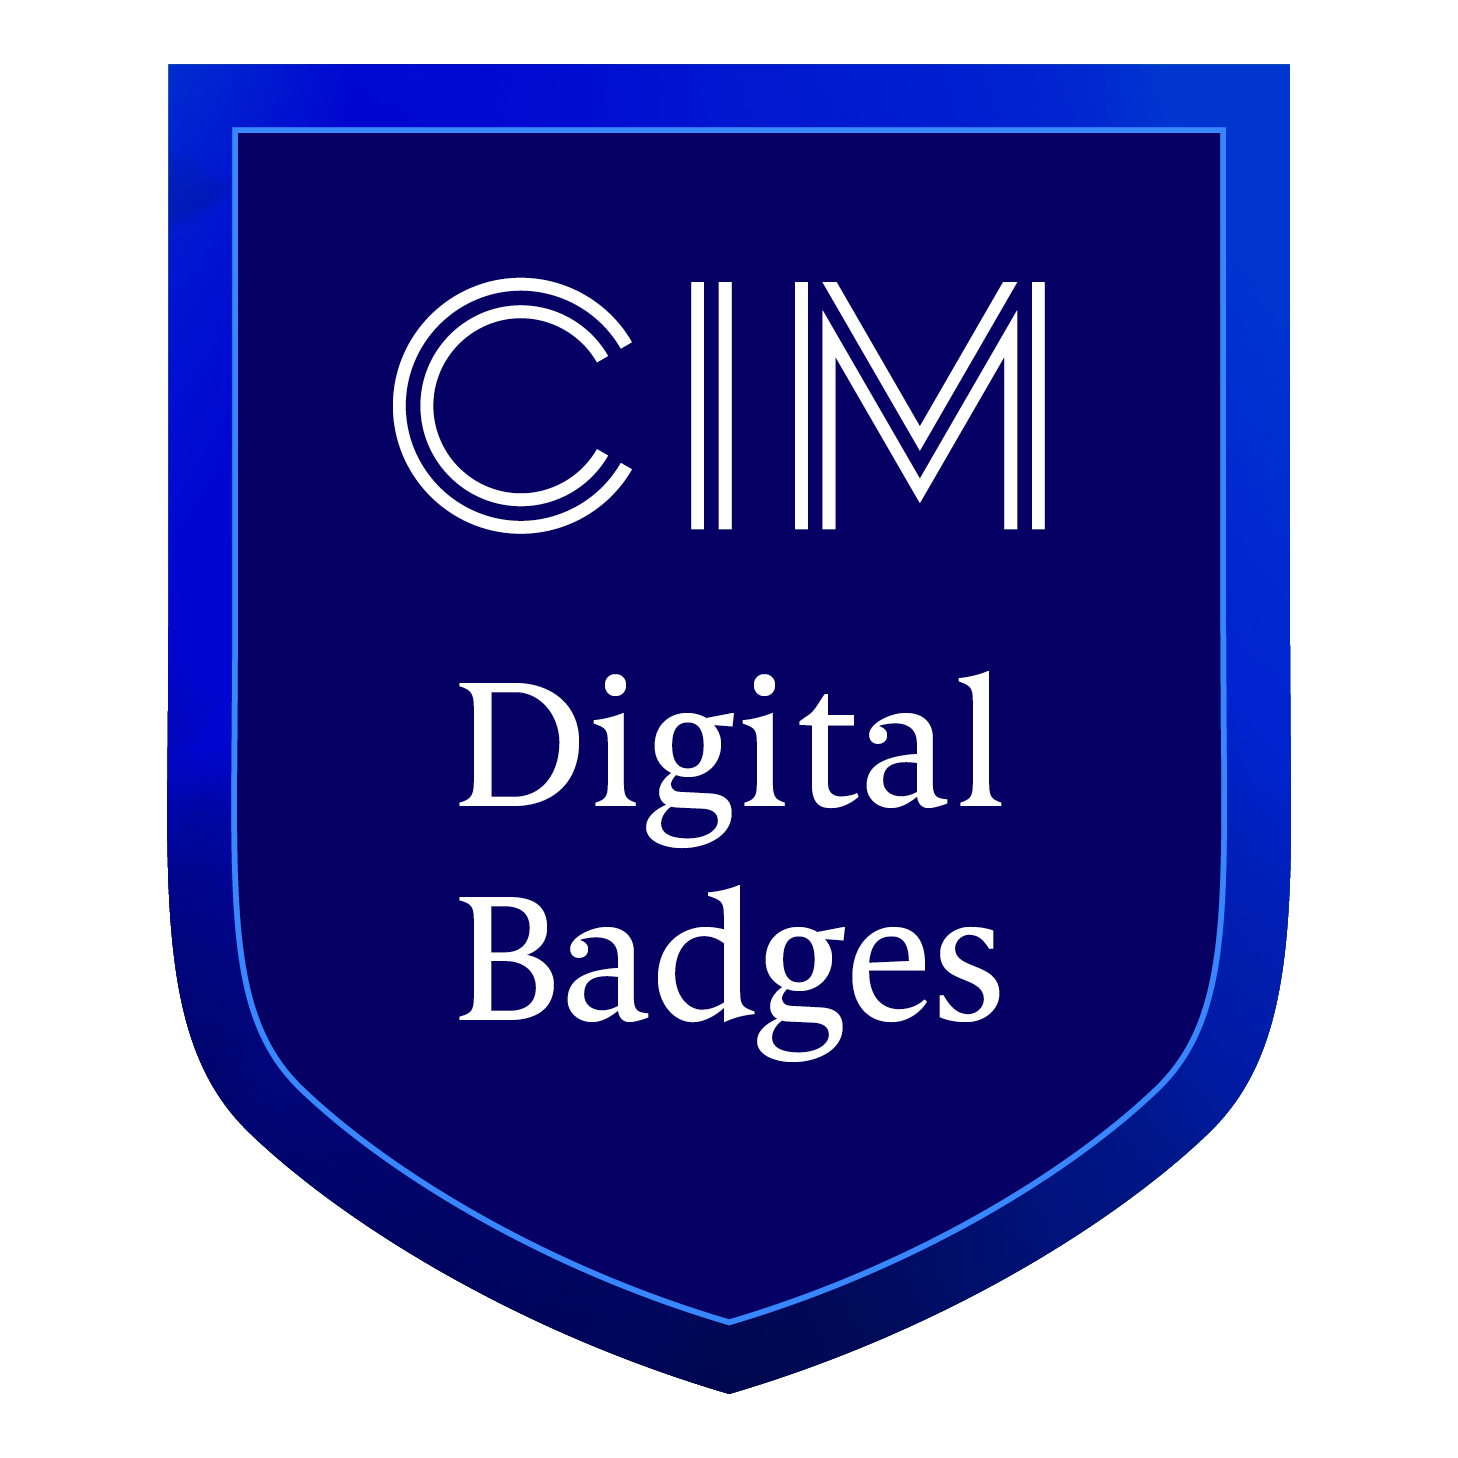 CIM Digital Badges